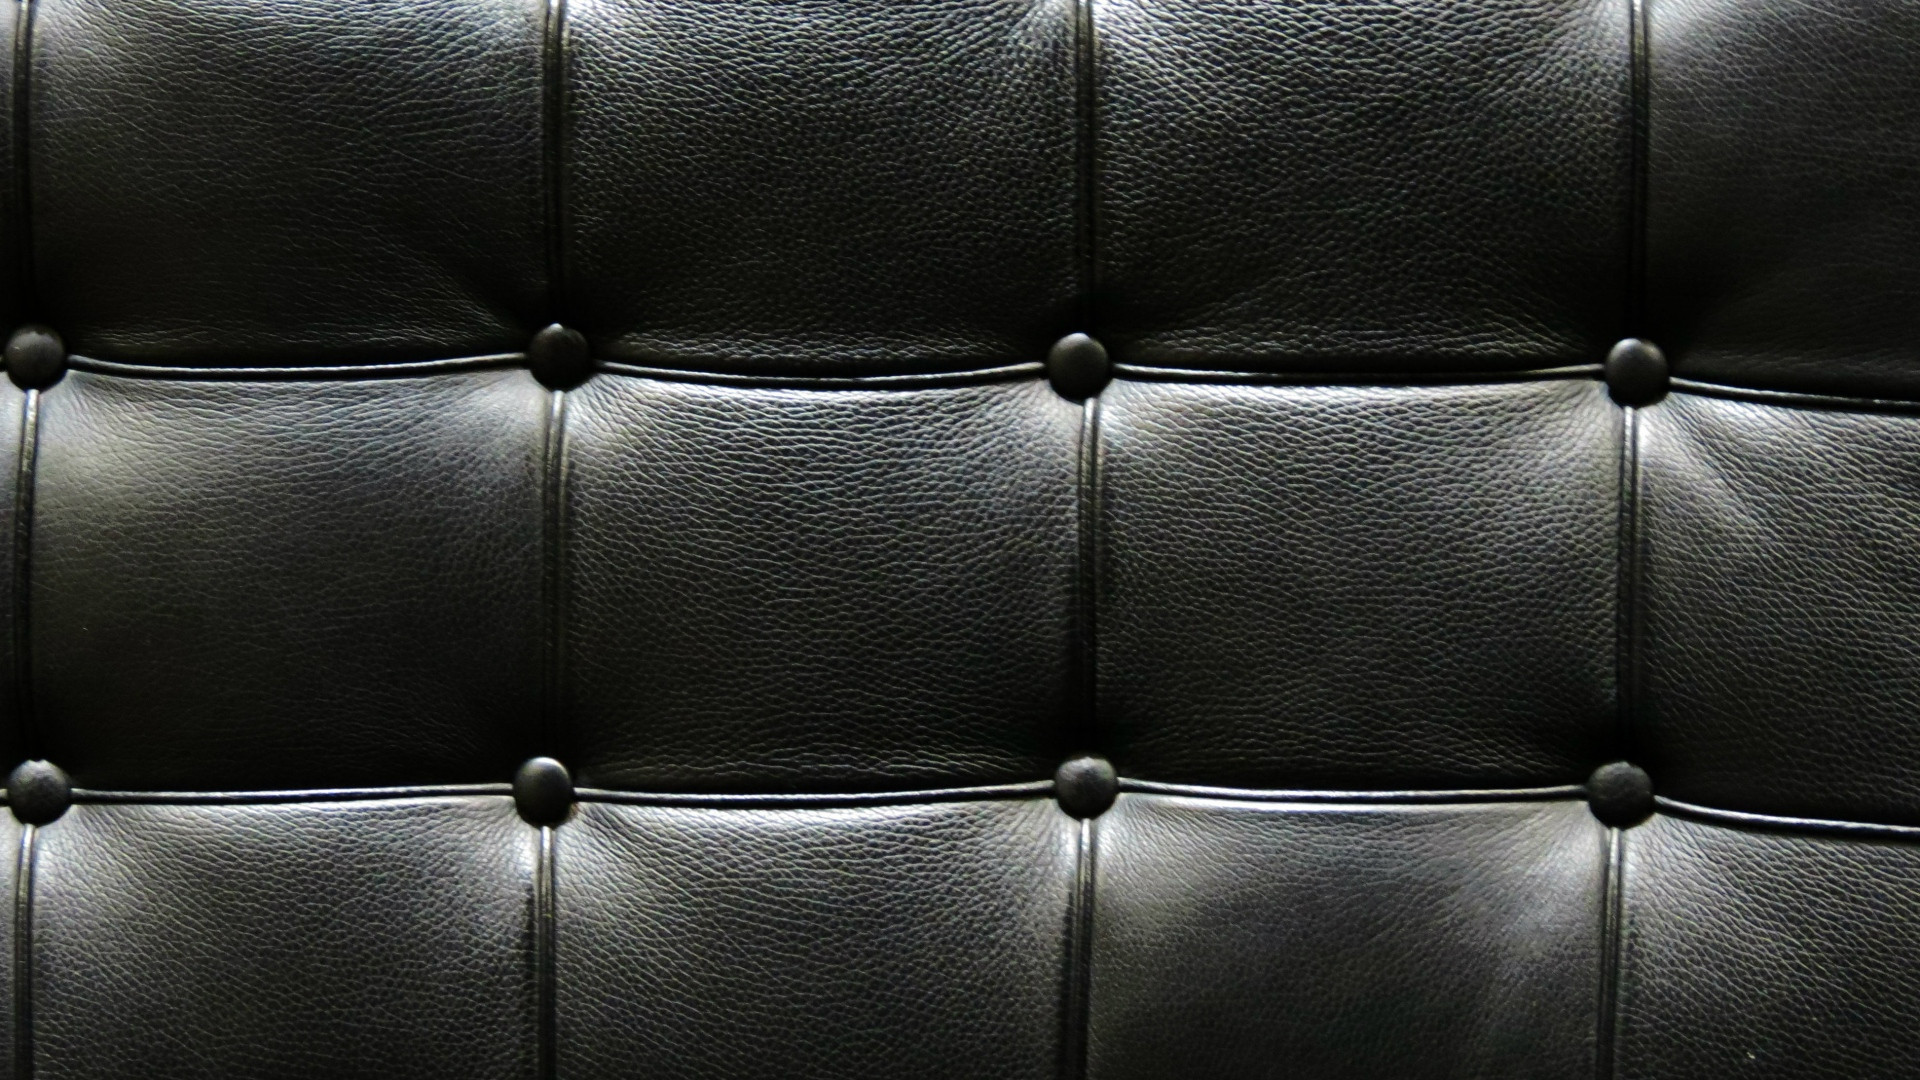 1920x1080 Wallpaper Black Leather Incredible Black Leather Wallpaper Hd